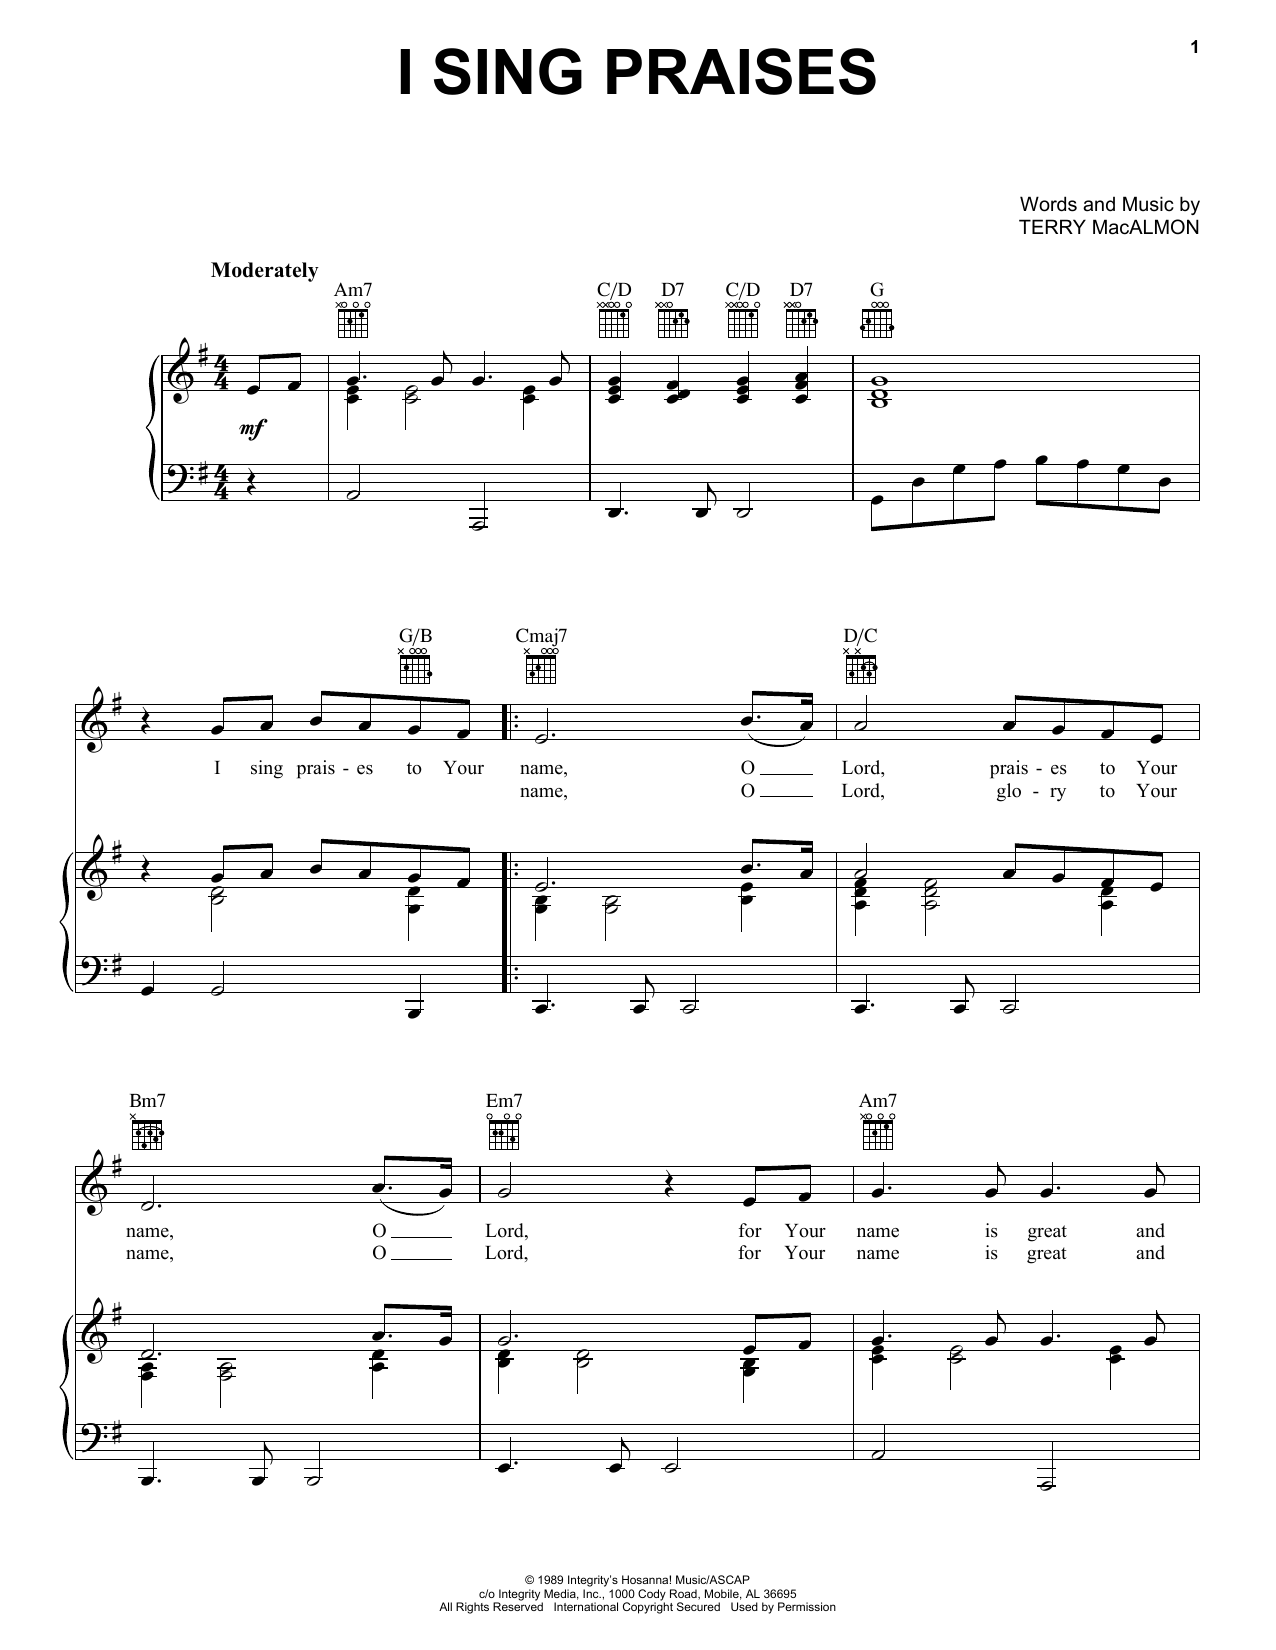 Terry Macalmon I Sing Praises Sheet Music Notes & Chords for Melody Line, Lyrics & Chords - Download or Print PDF